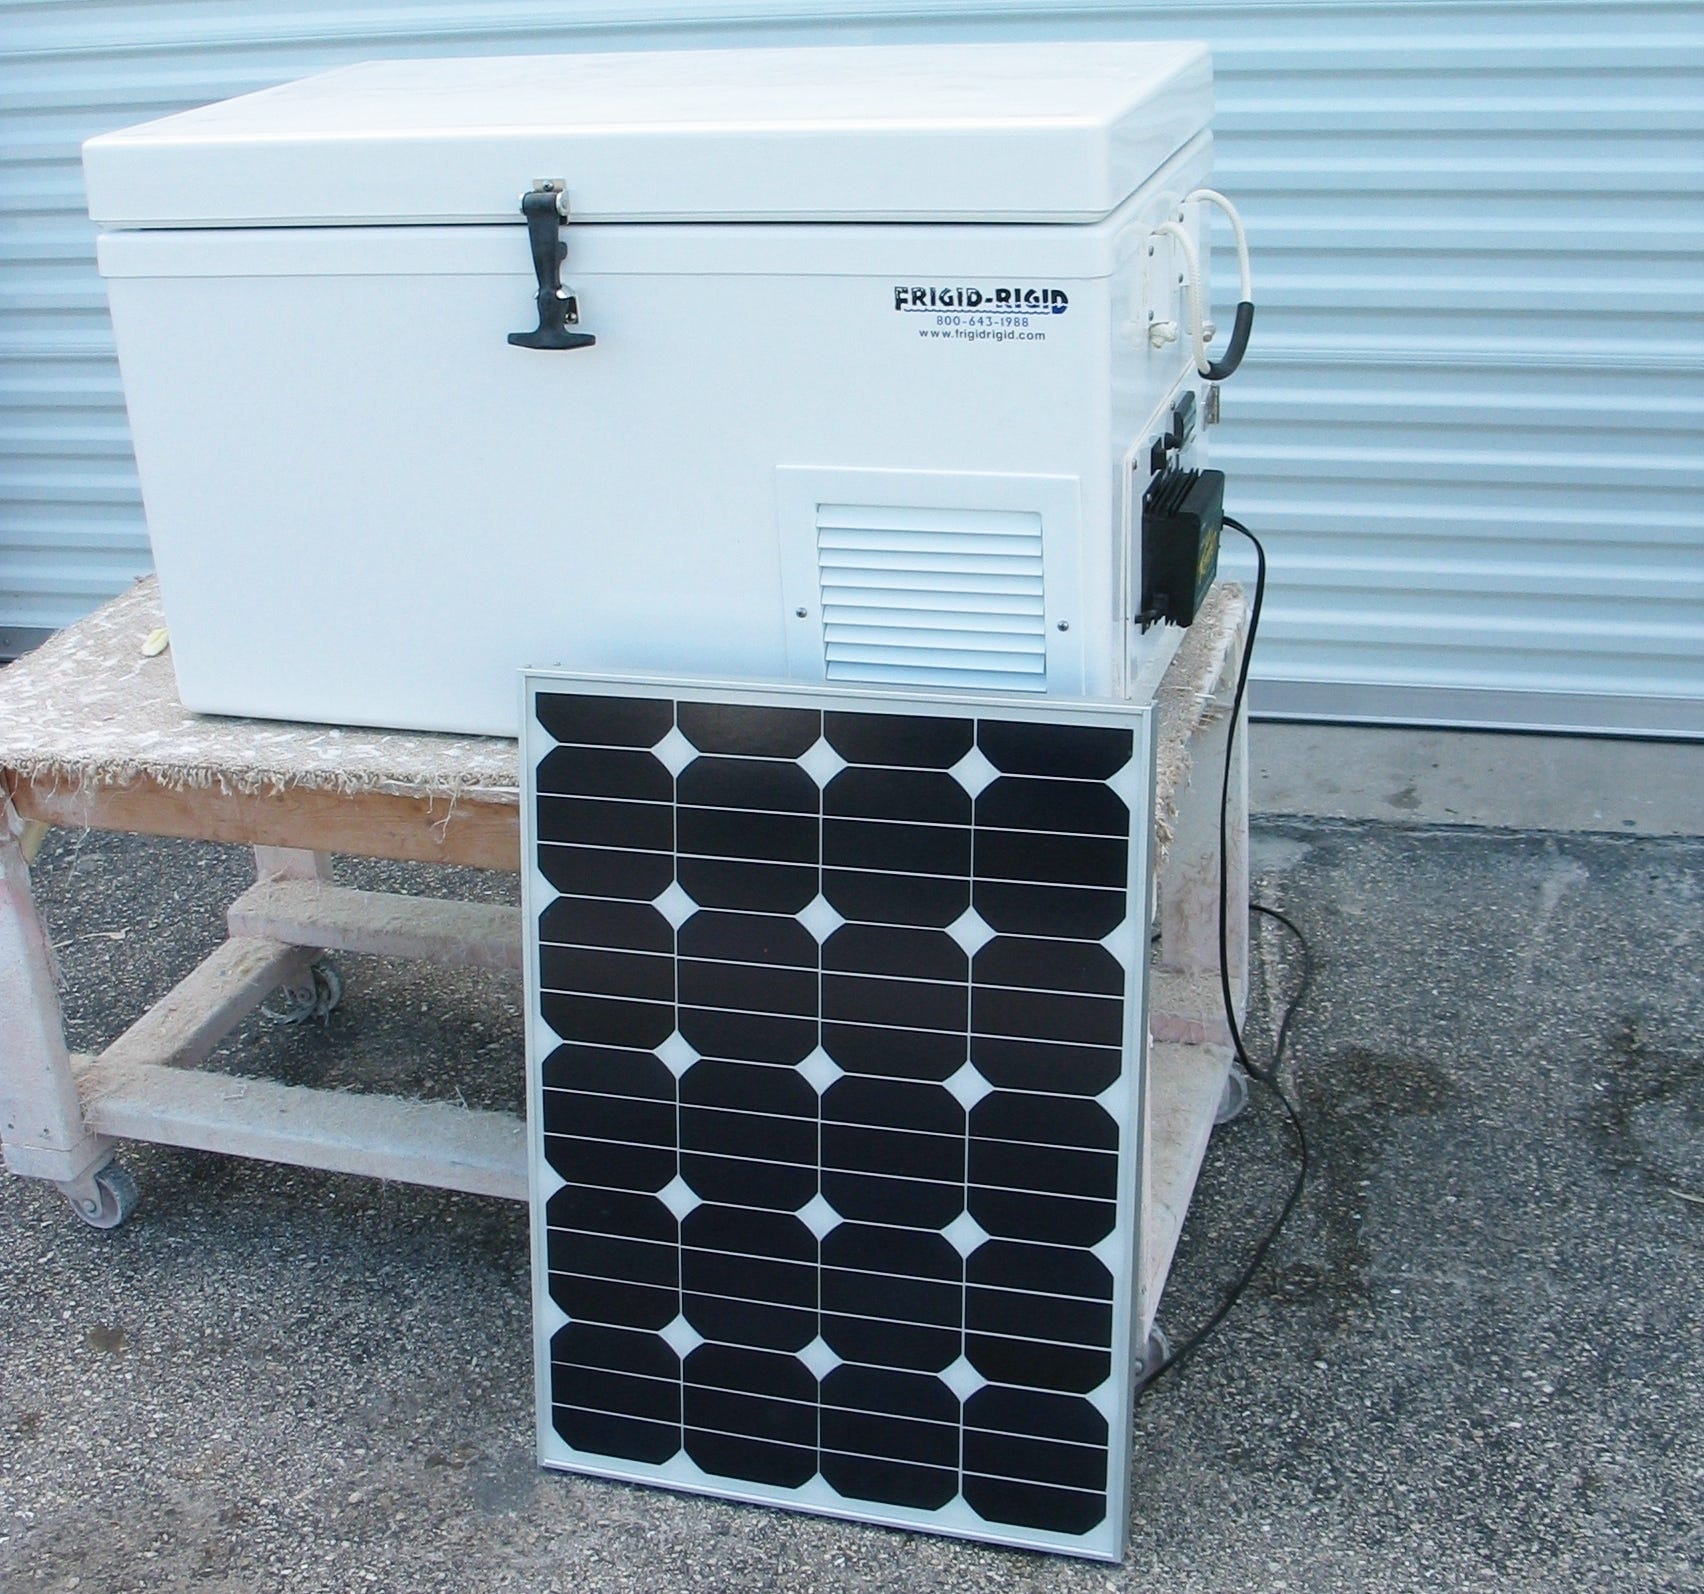 solar freezer in nigeria